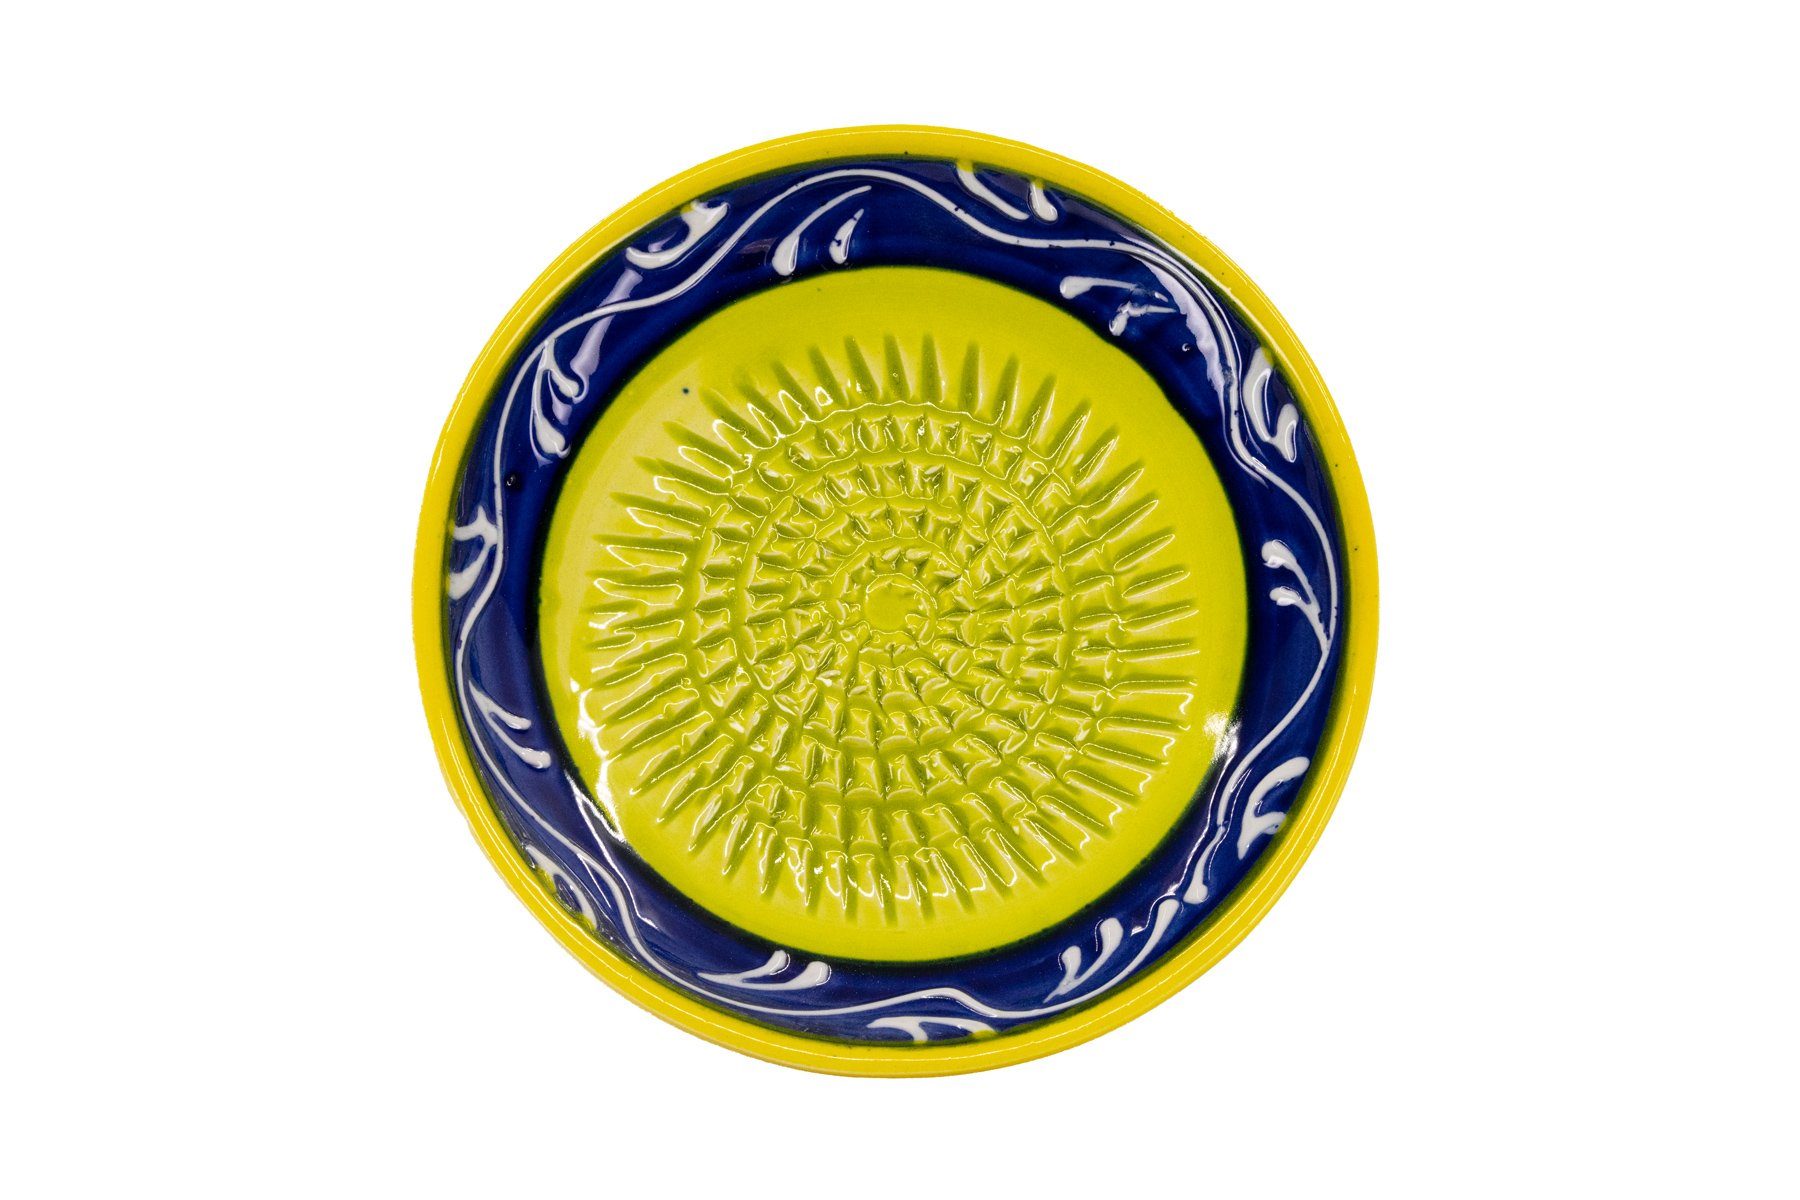 Kaladia Multireibe 12cm Reibeteller in grün & blau, Keramik, handbemalte Küchenreibe - Made in Spain